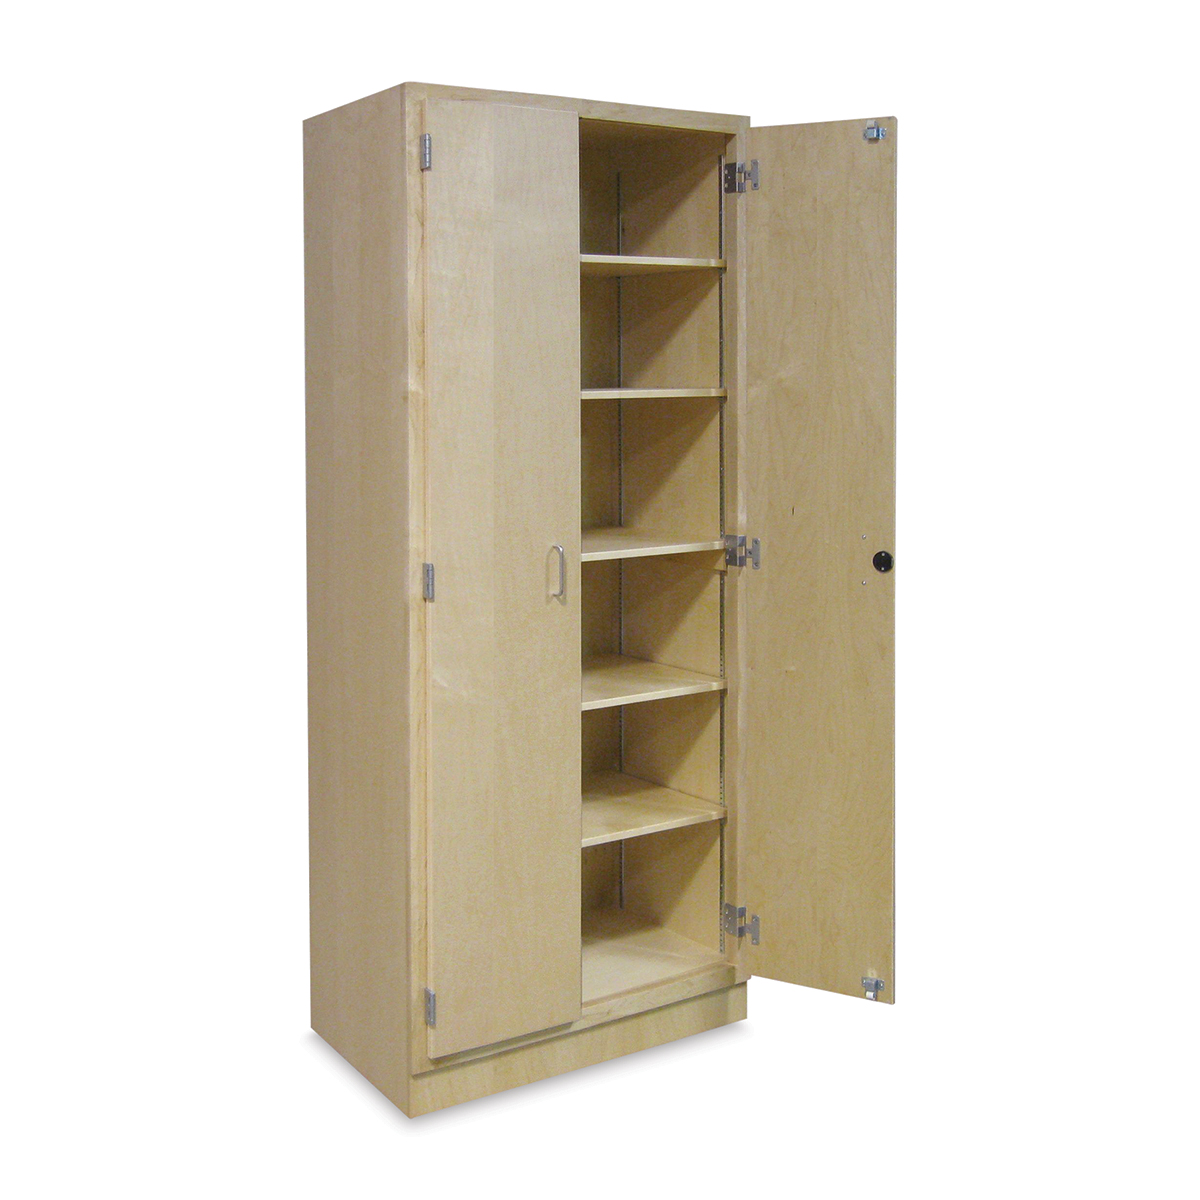 Hann Hardwood Storage Cabinet